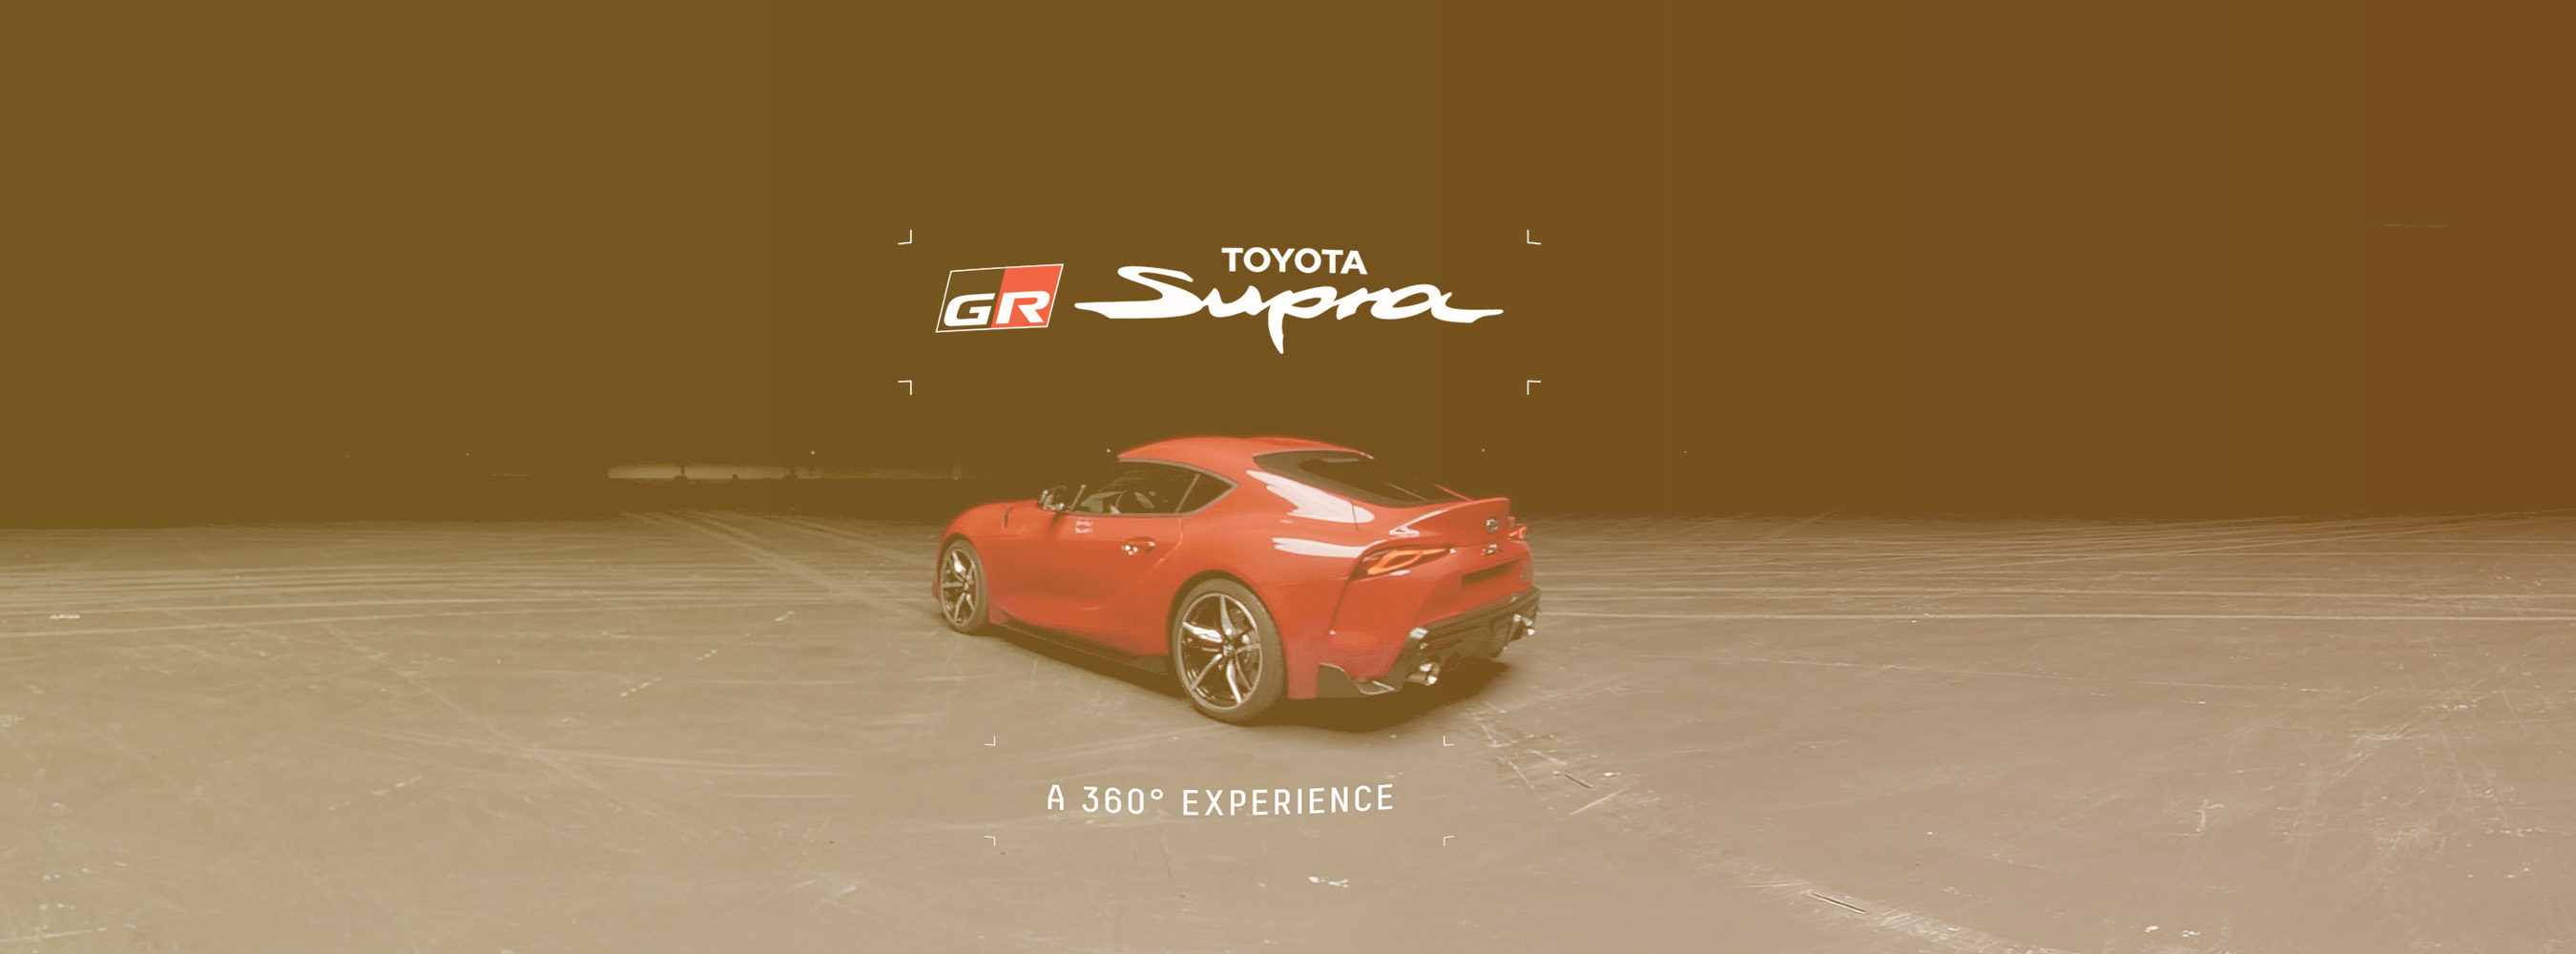 New Toyota GR Supra